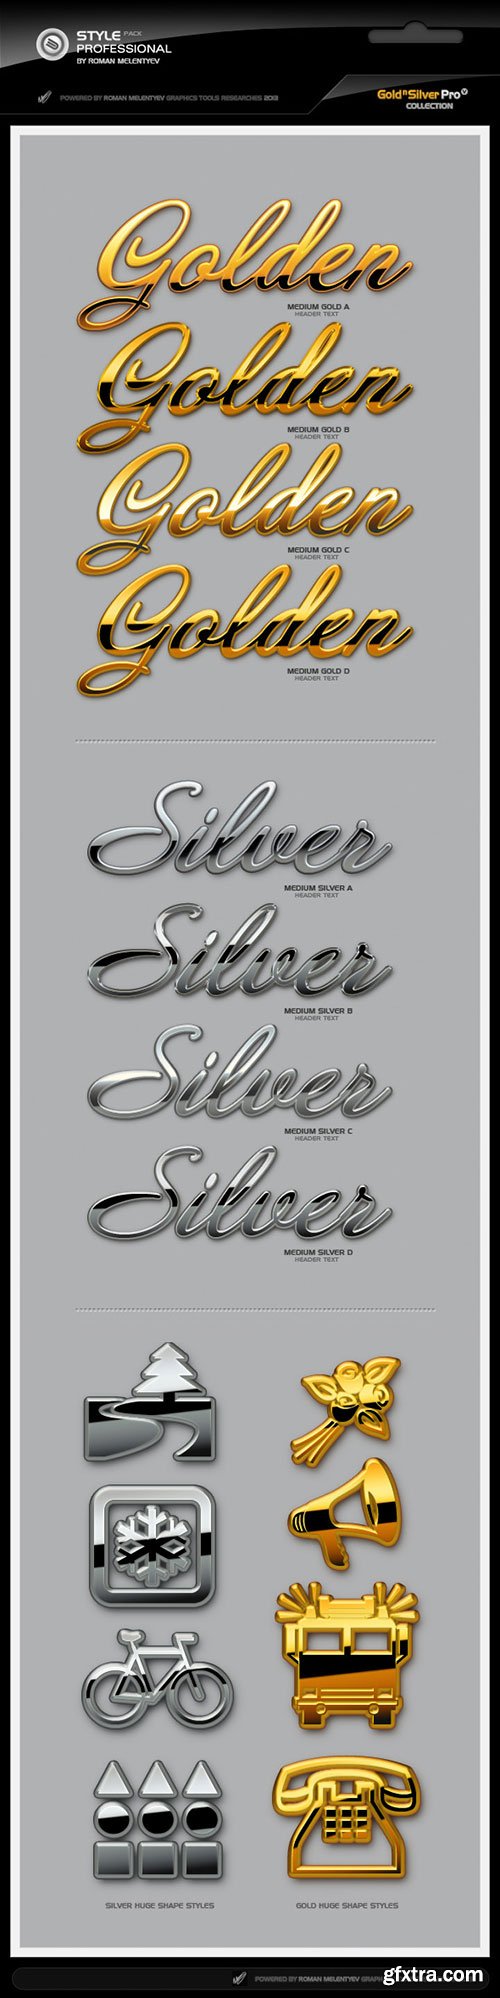 GraphicRiver - Gold & Silver Styles Pro